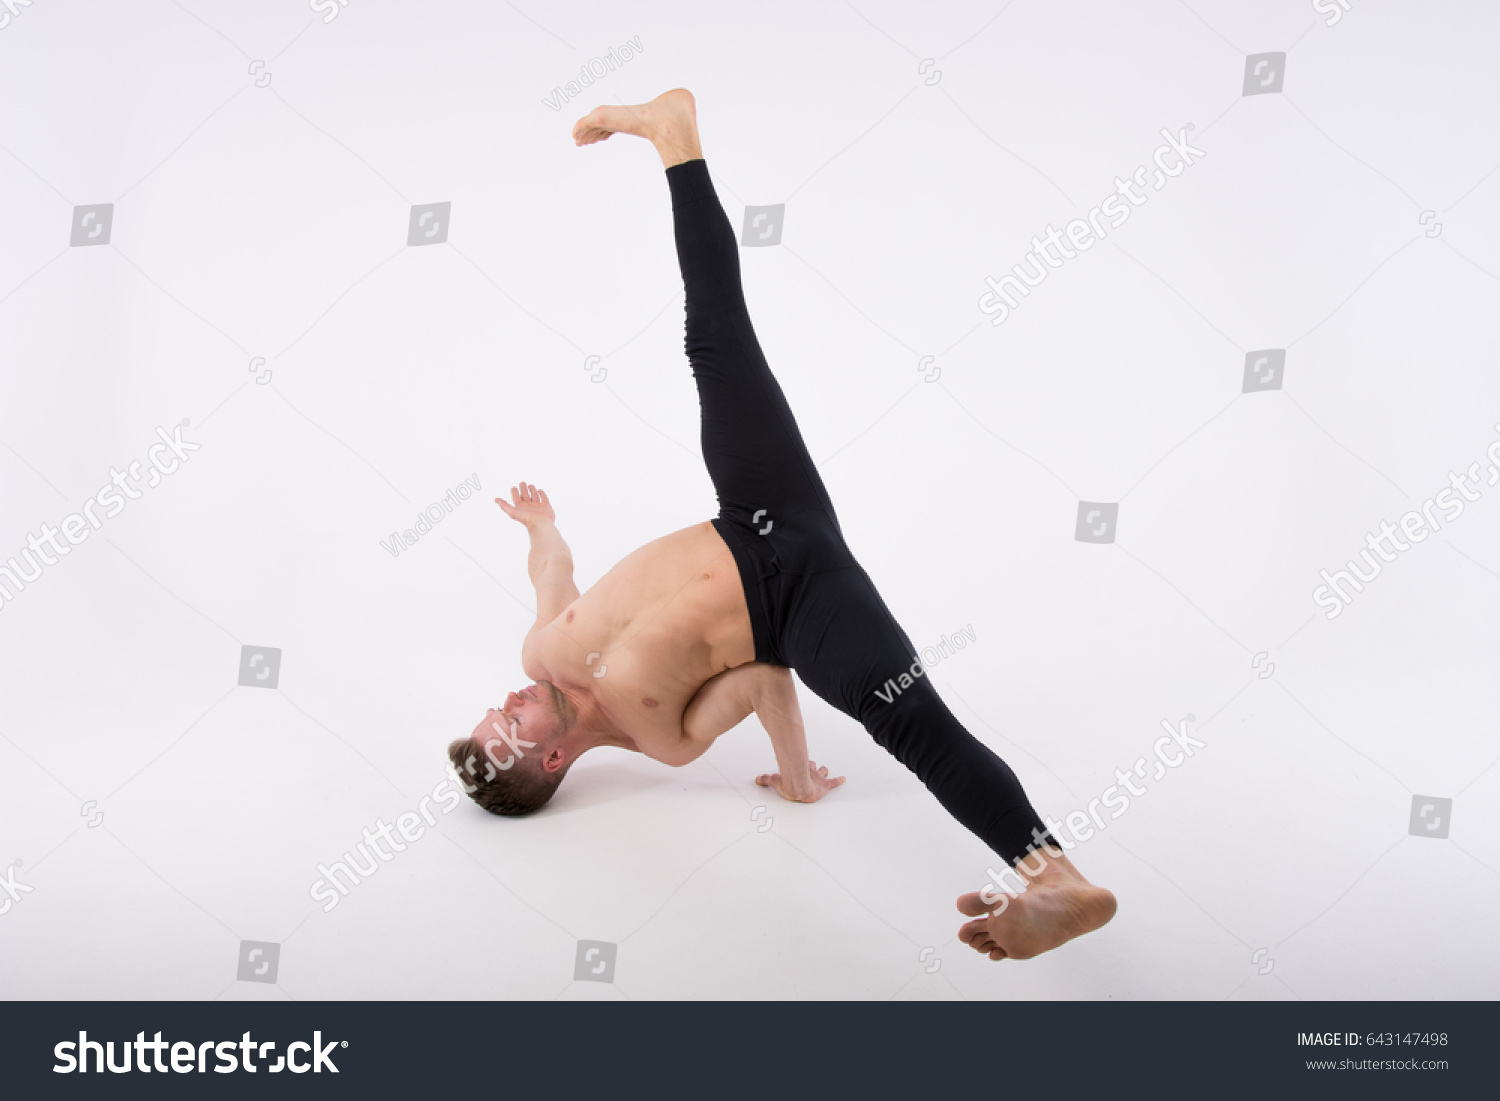 Sexy gymnastics guys